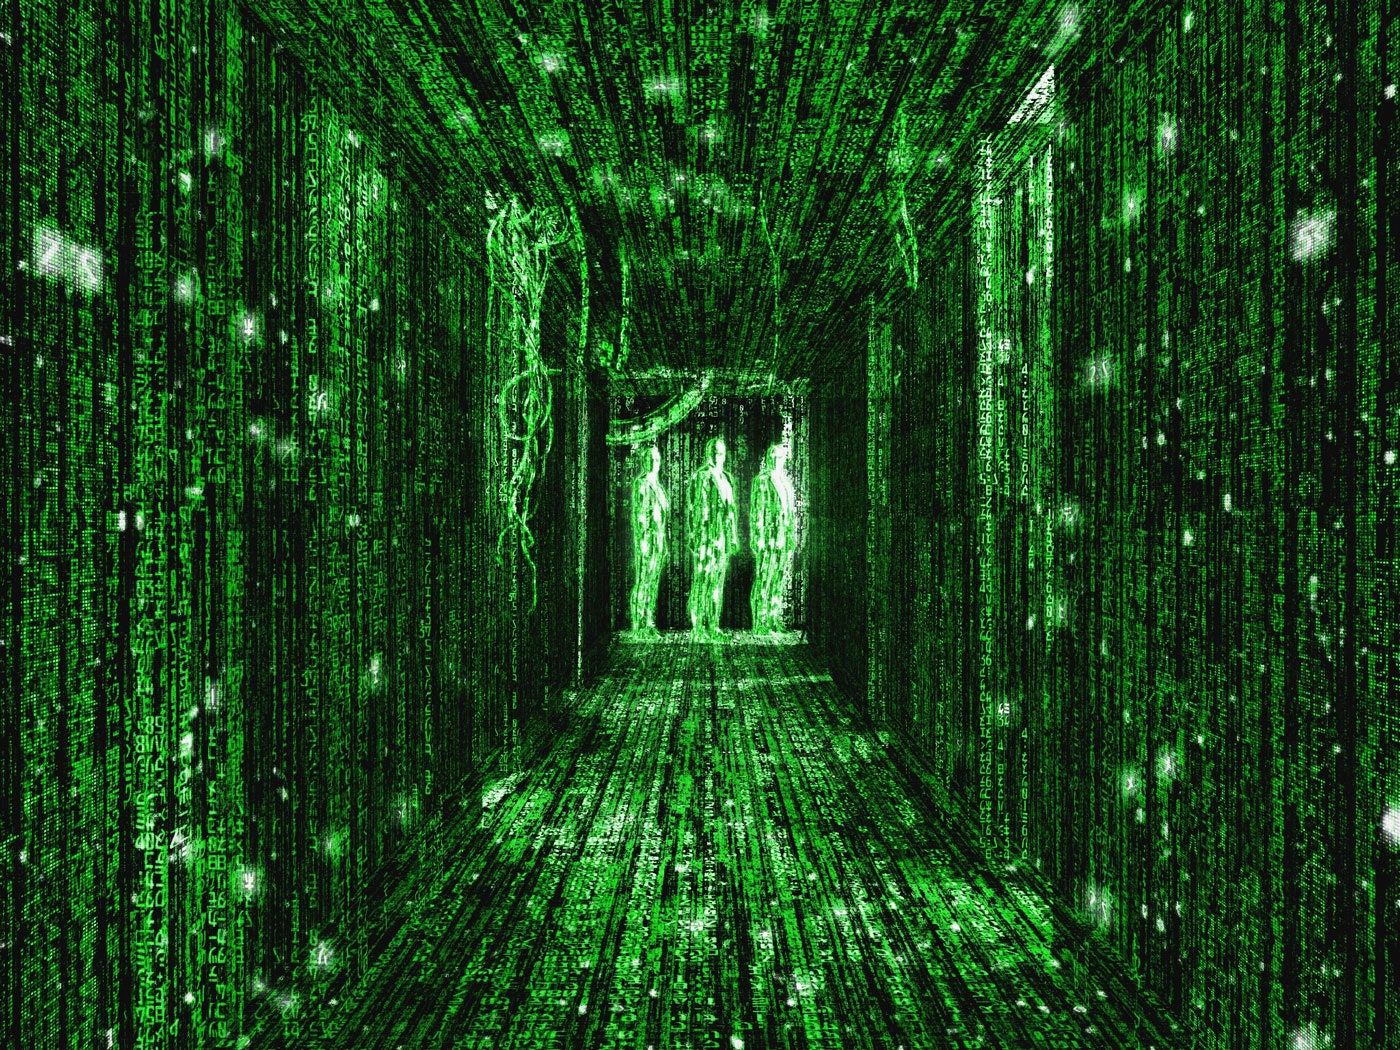 The Matrix Wallpapers